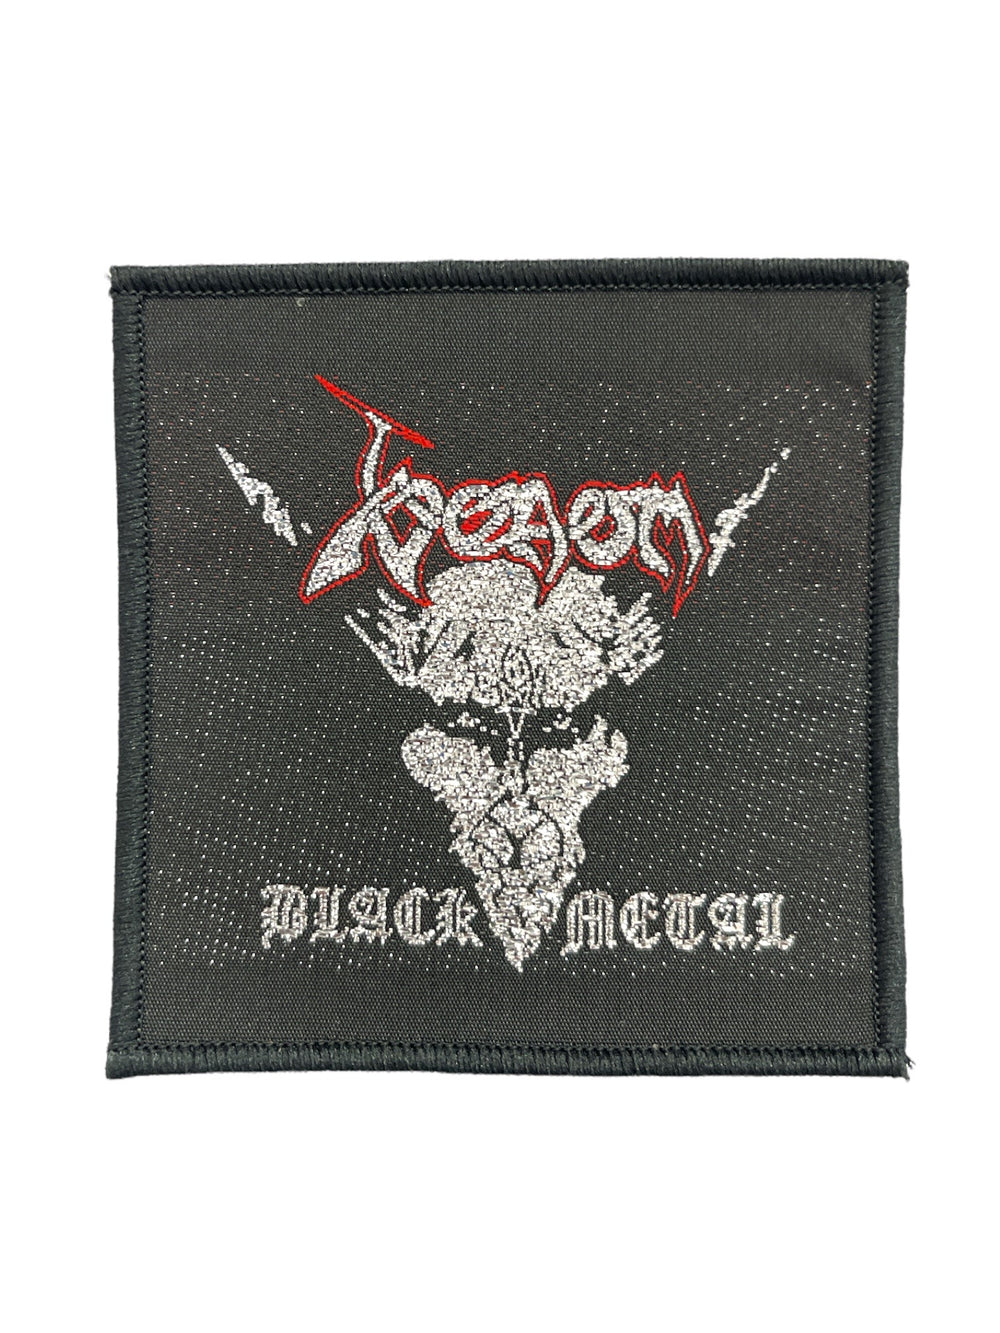 Venom Black Metal Glitter Official Woven Patch Brand New